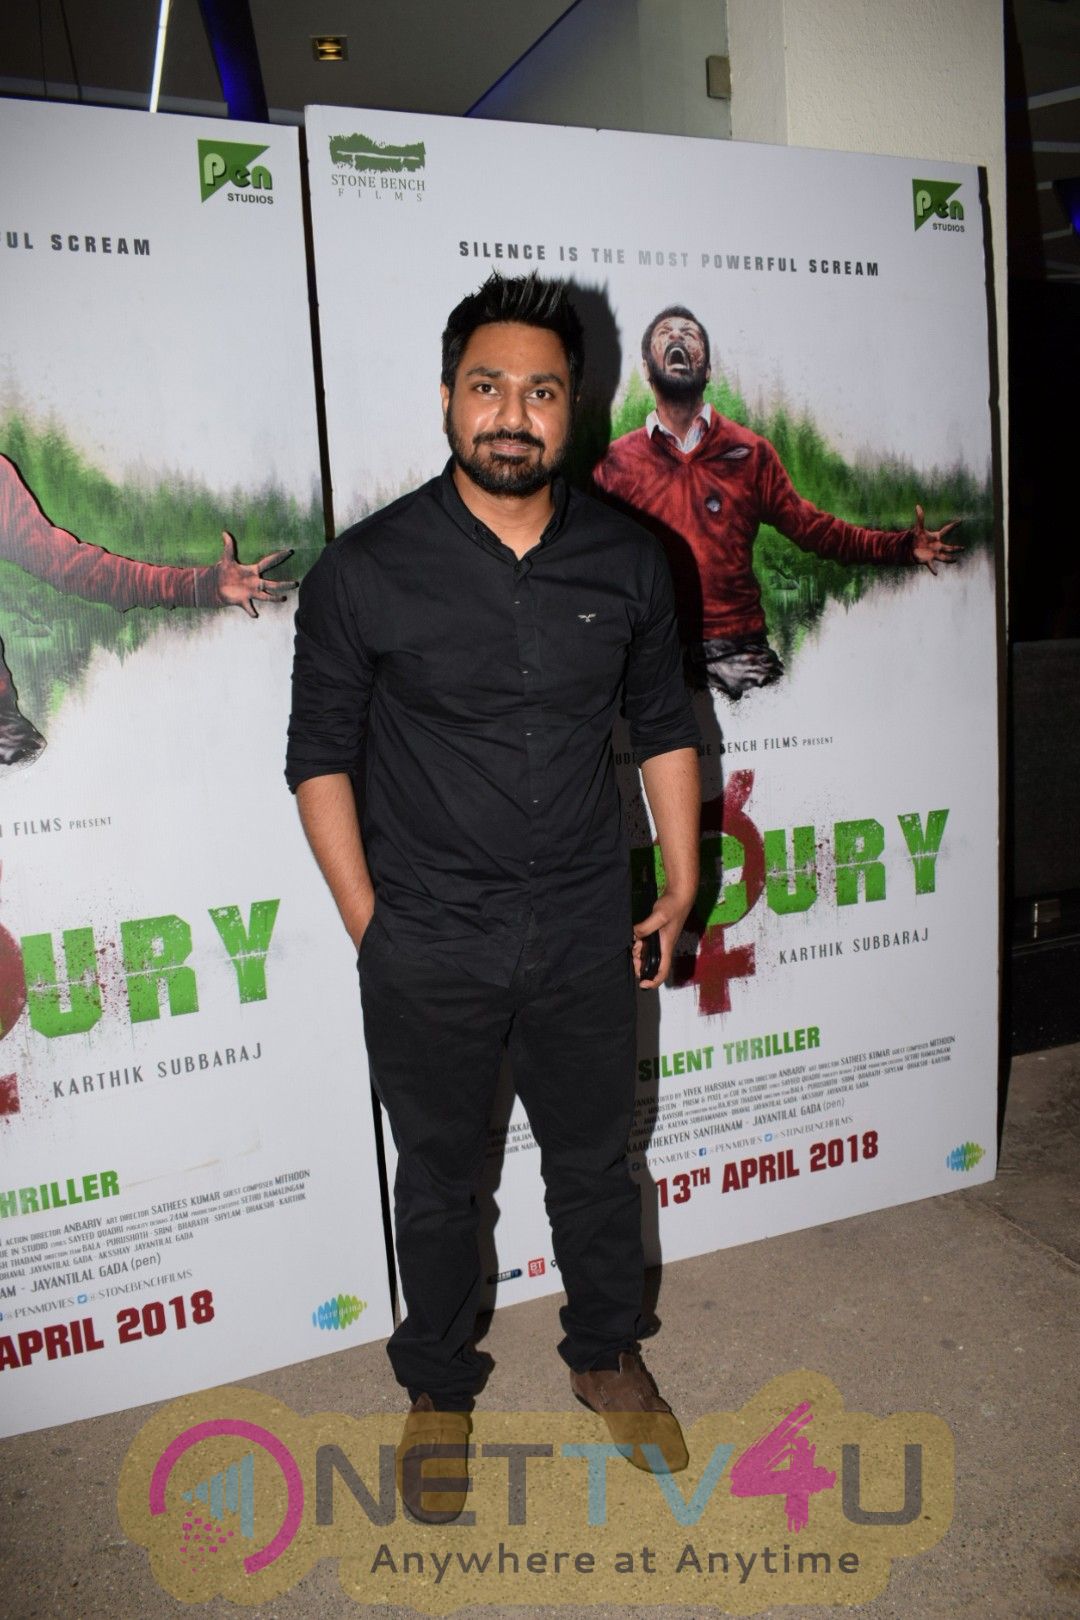 Mercury Full Movie Hindi : War (2019) hindi full movie ...